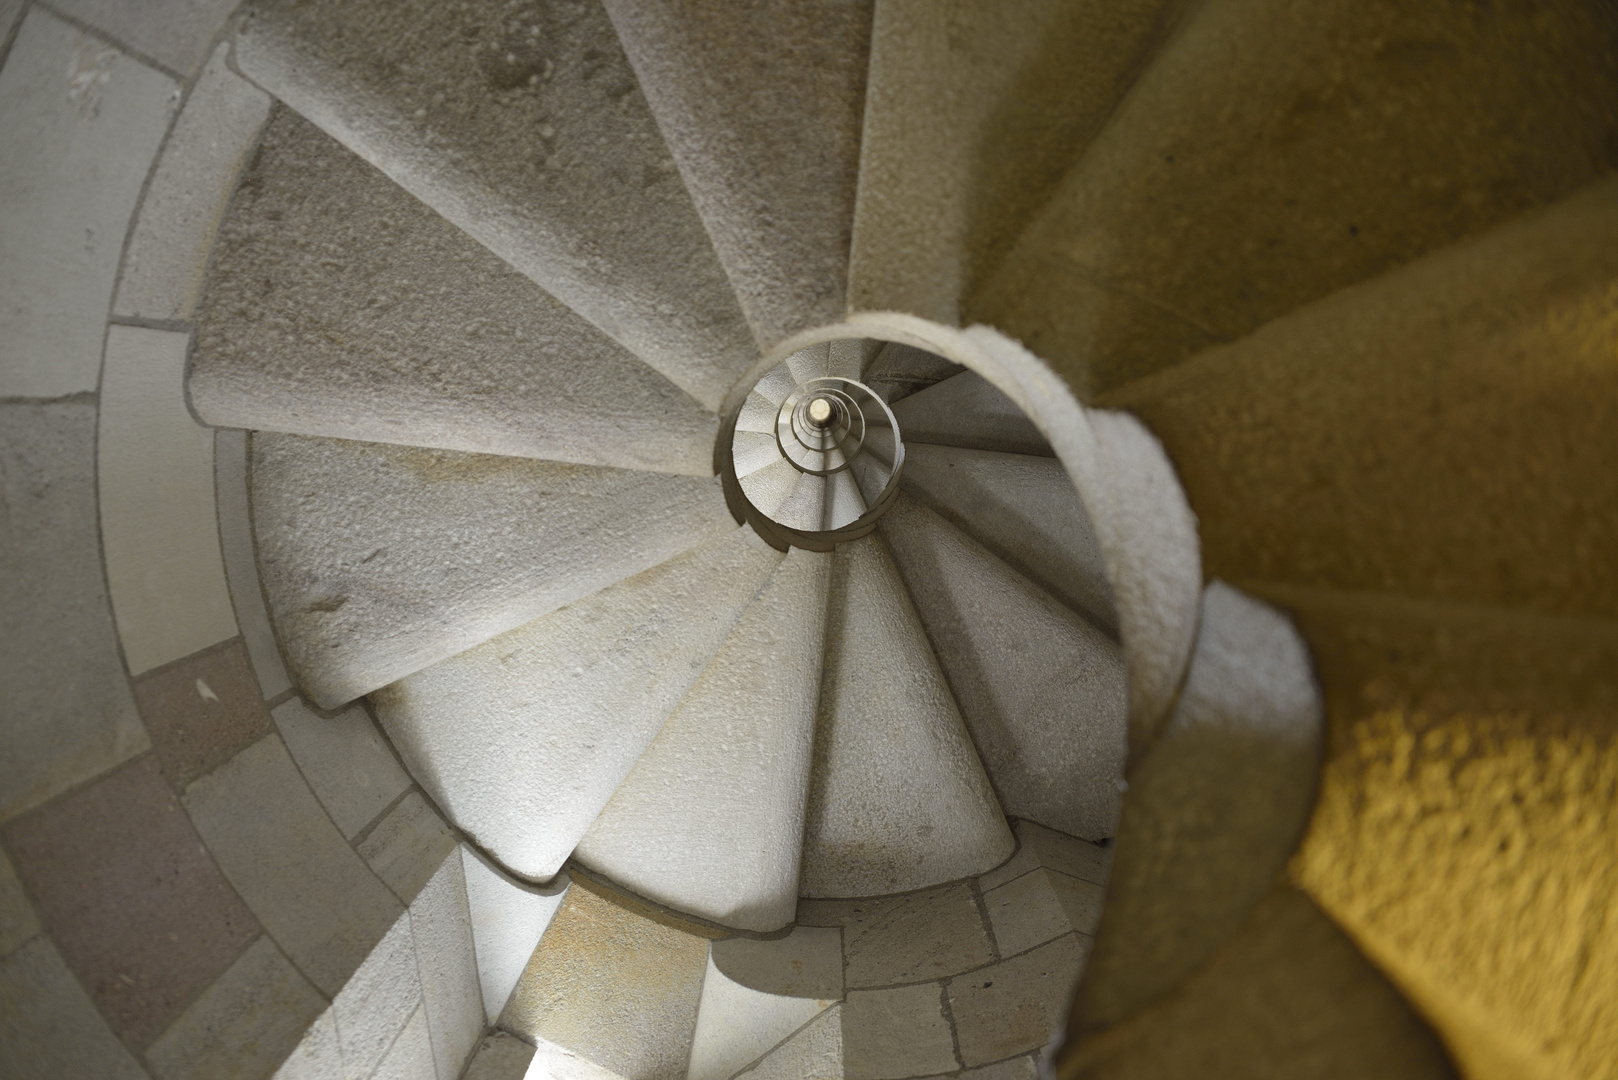 Barcelona Sagrada Familia Wendeltreppe / corkscrew stairs